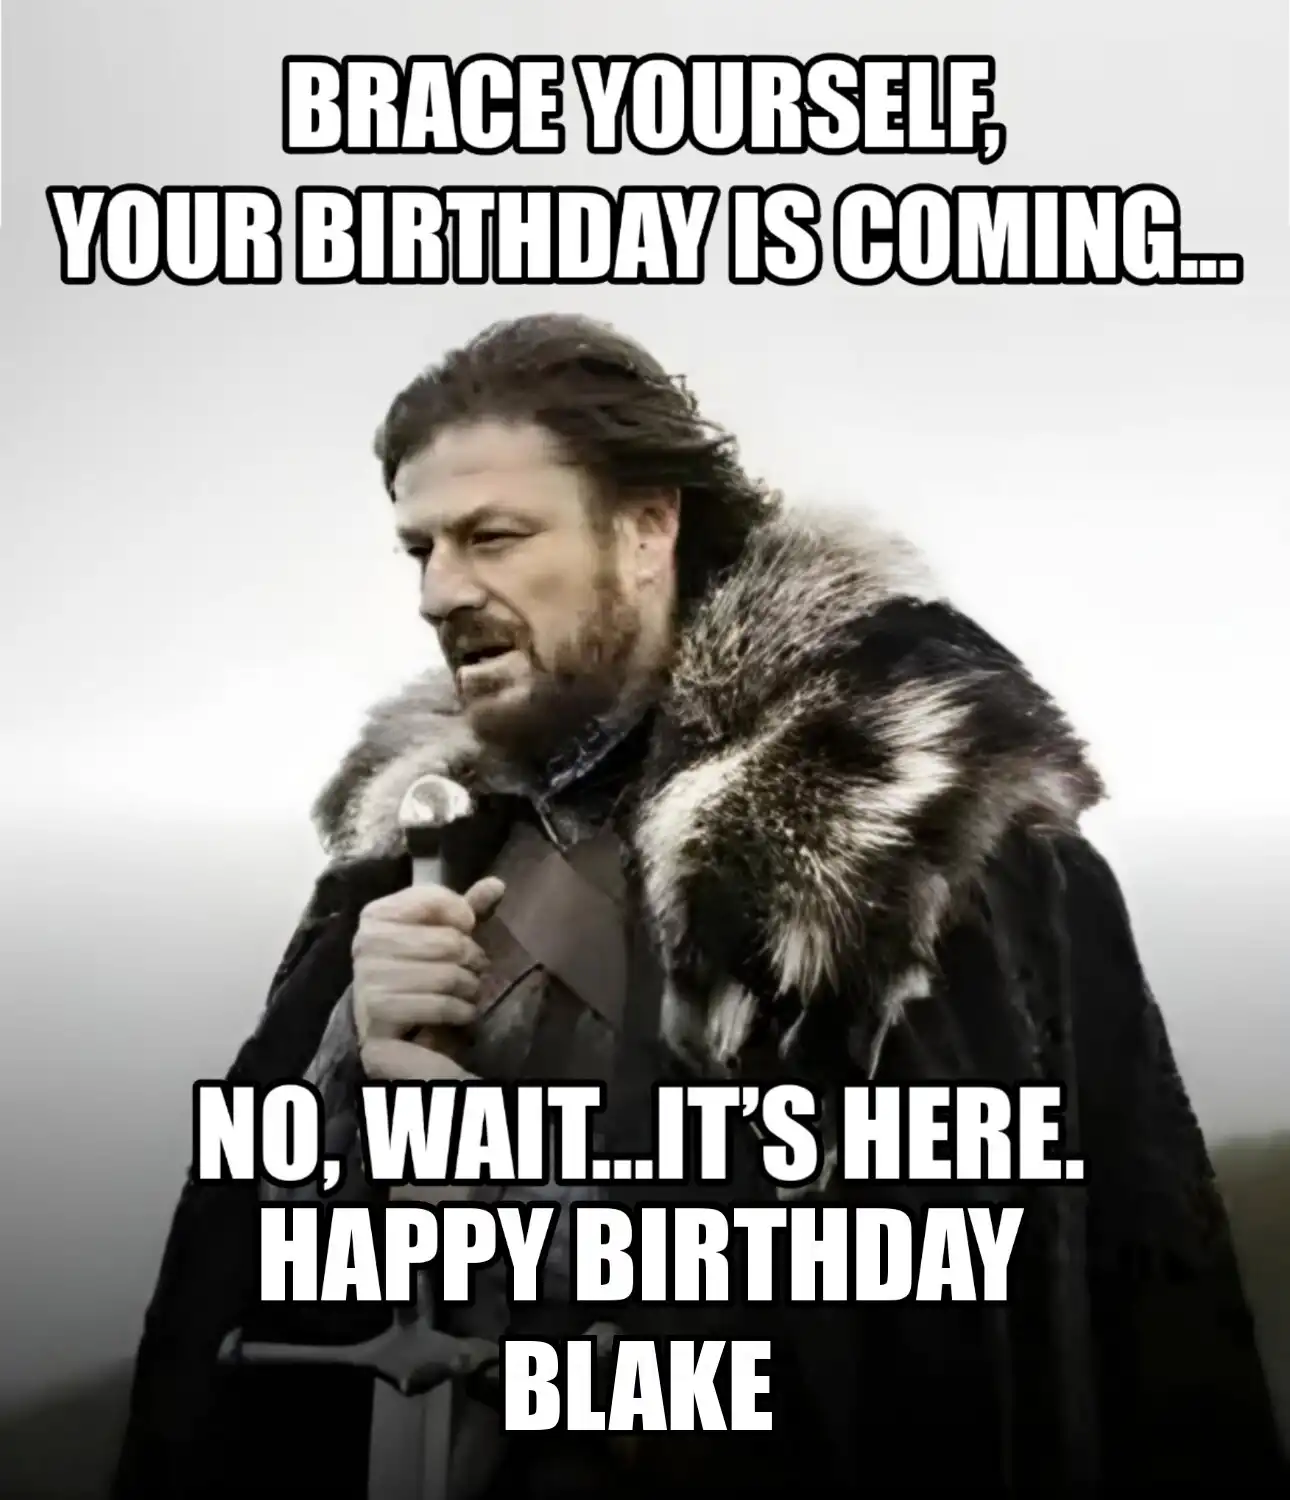 Happy Birthday Blake Brace Yourself Your Birthday Is Coming Meme